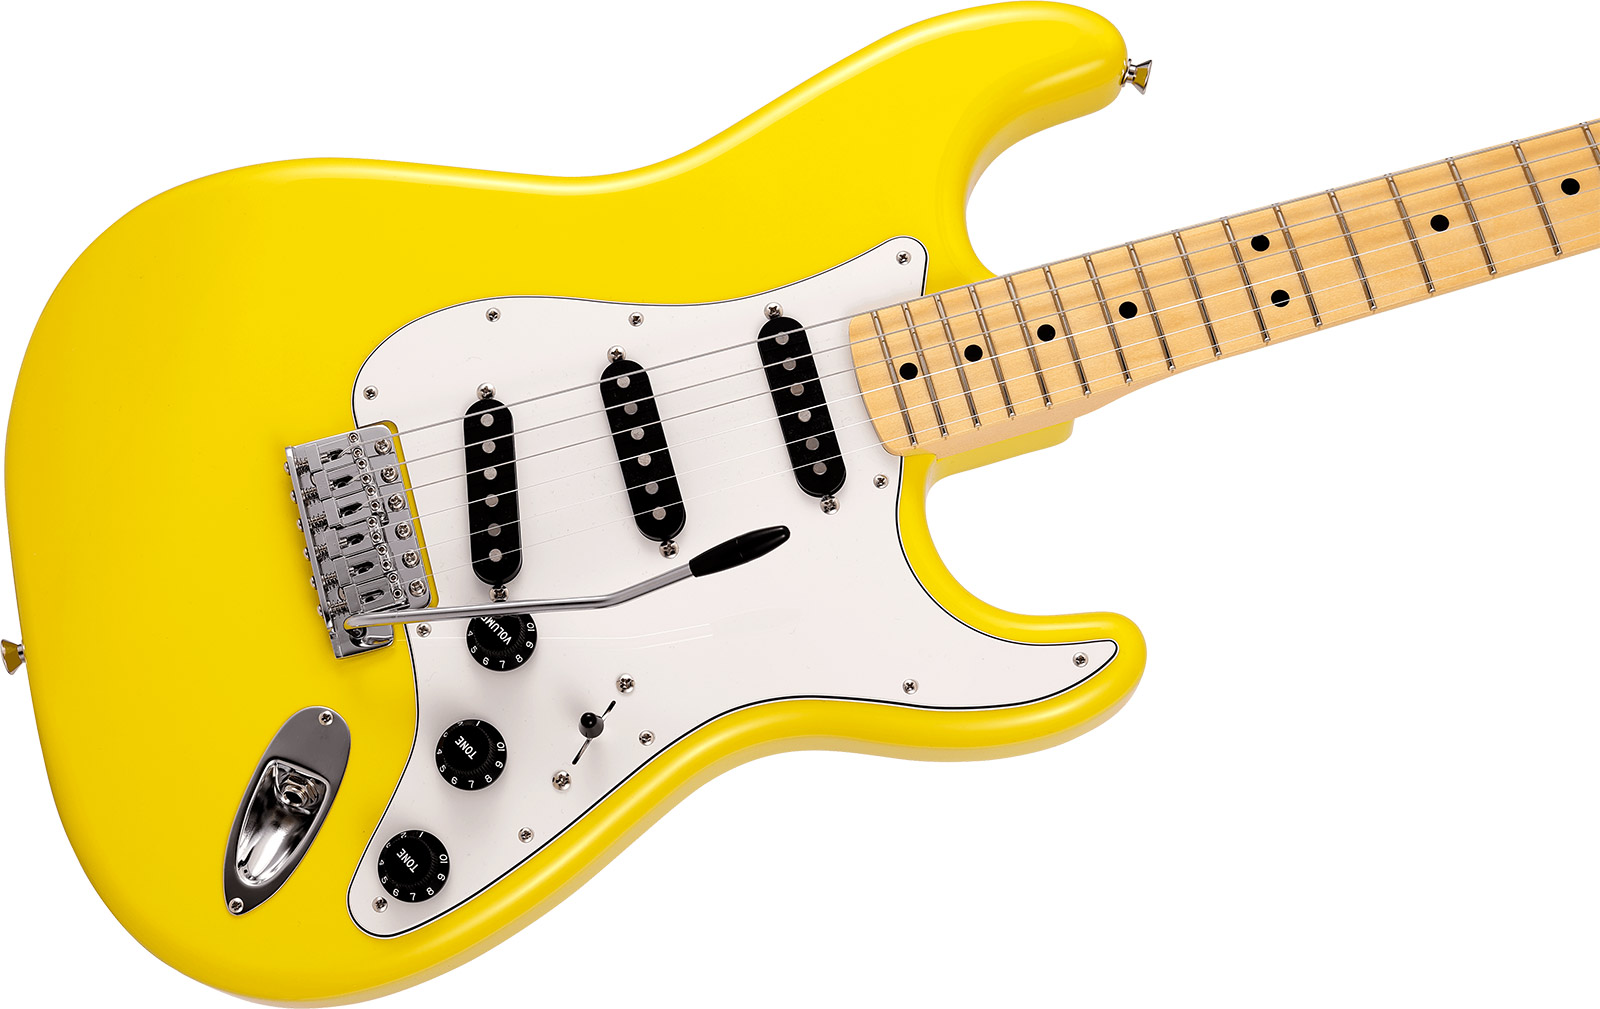 Fender Strat International Color Ltd Jap 3s Trem Mn - Monaco Yellow - E-Gitarre in Str-Form - Variation 2